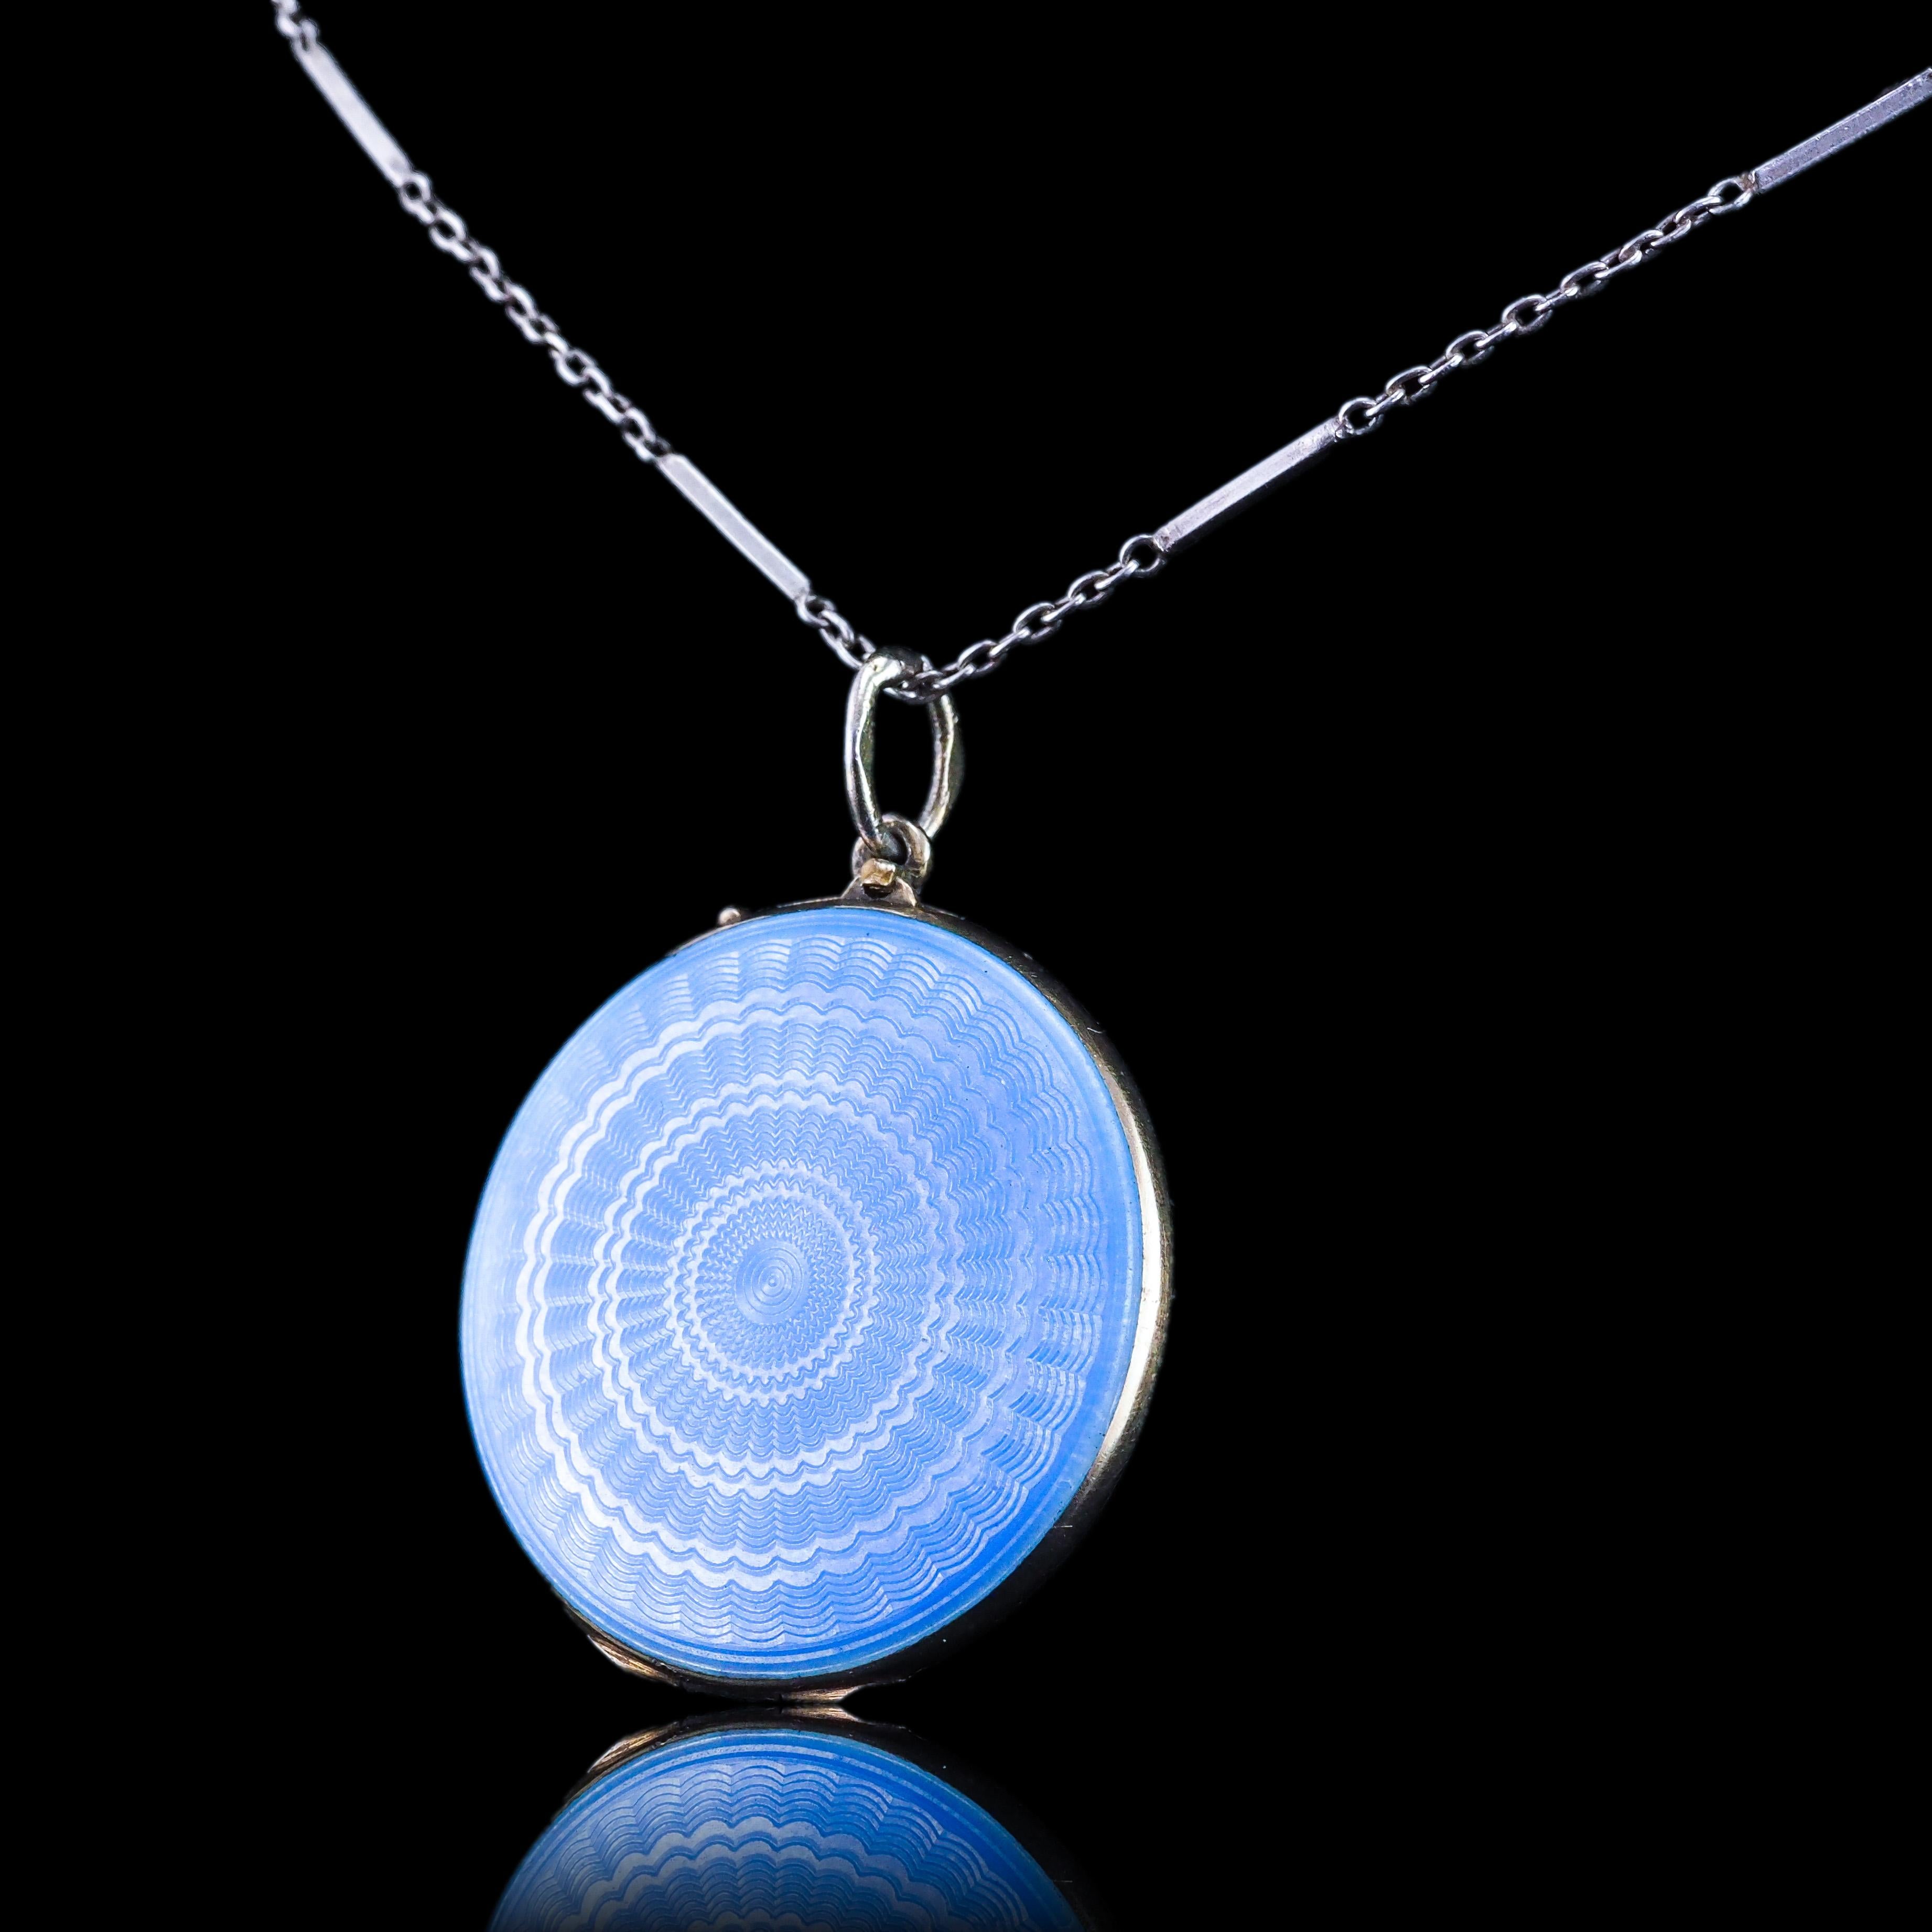 Antique Norwegian Blue Guilloche Enamel Pendant Necklace Locket - Marius Hammer For Sale 5